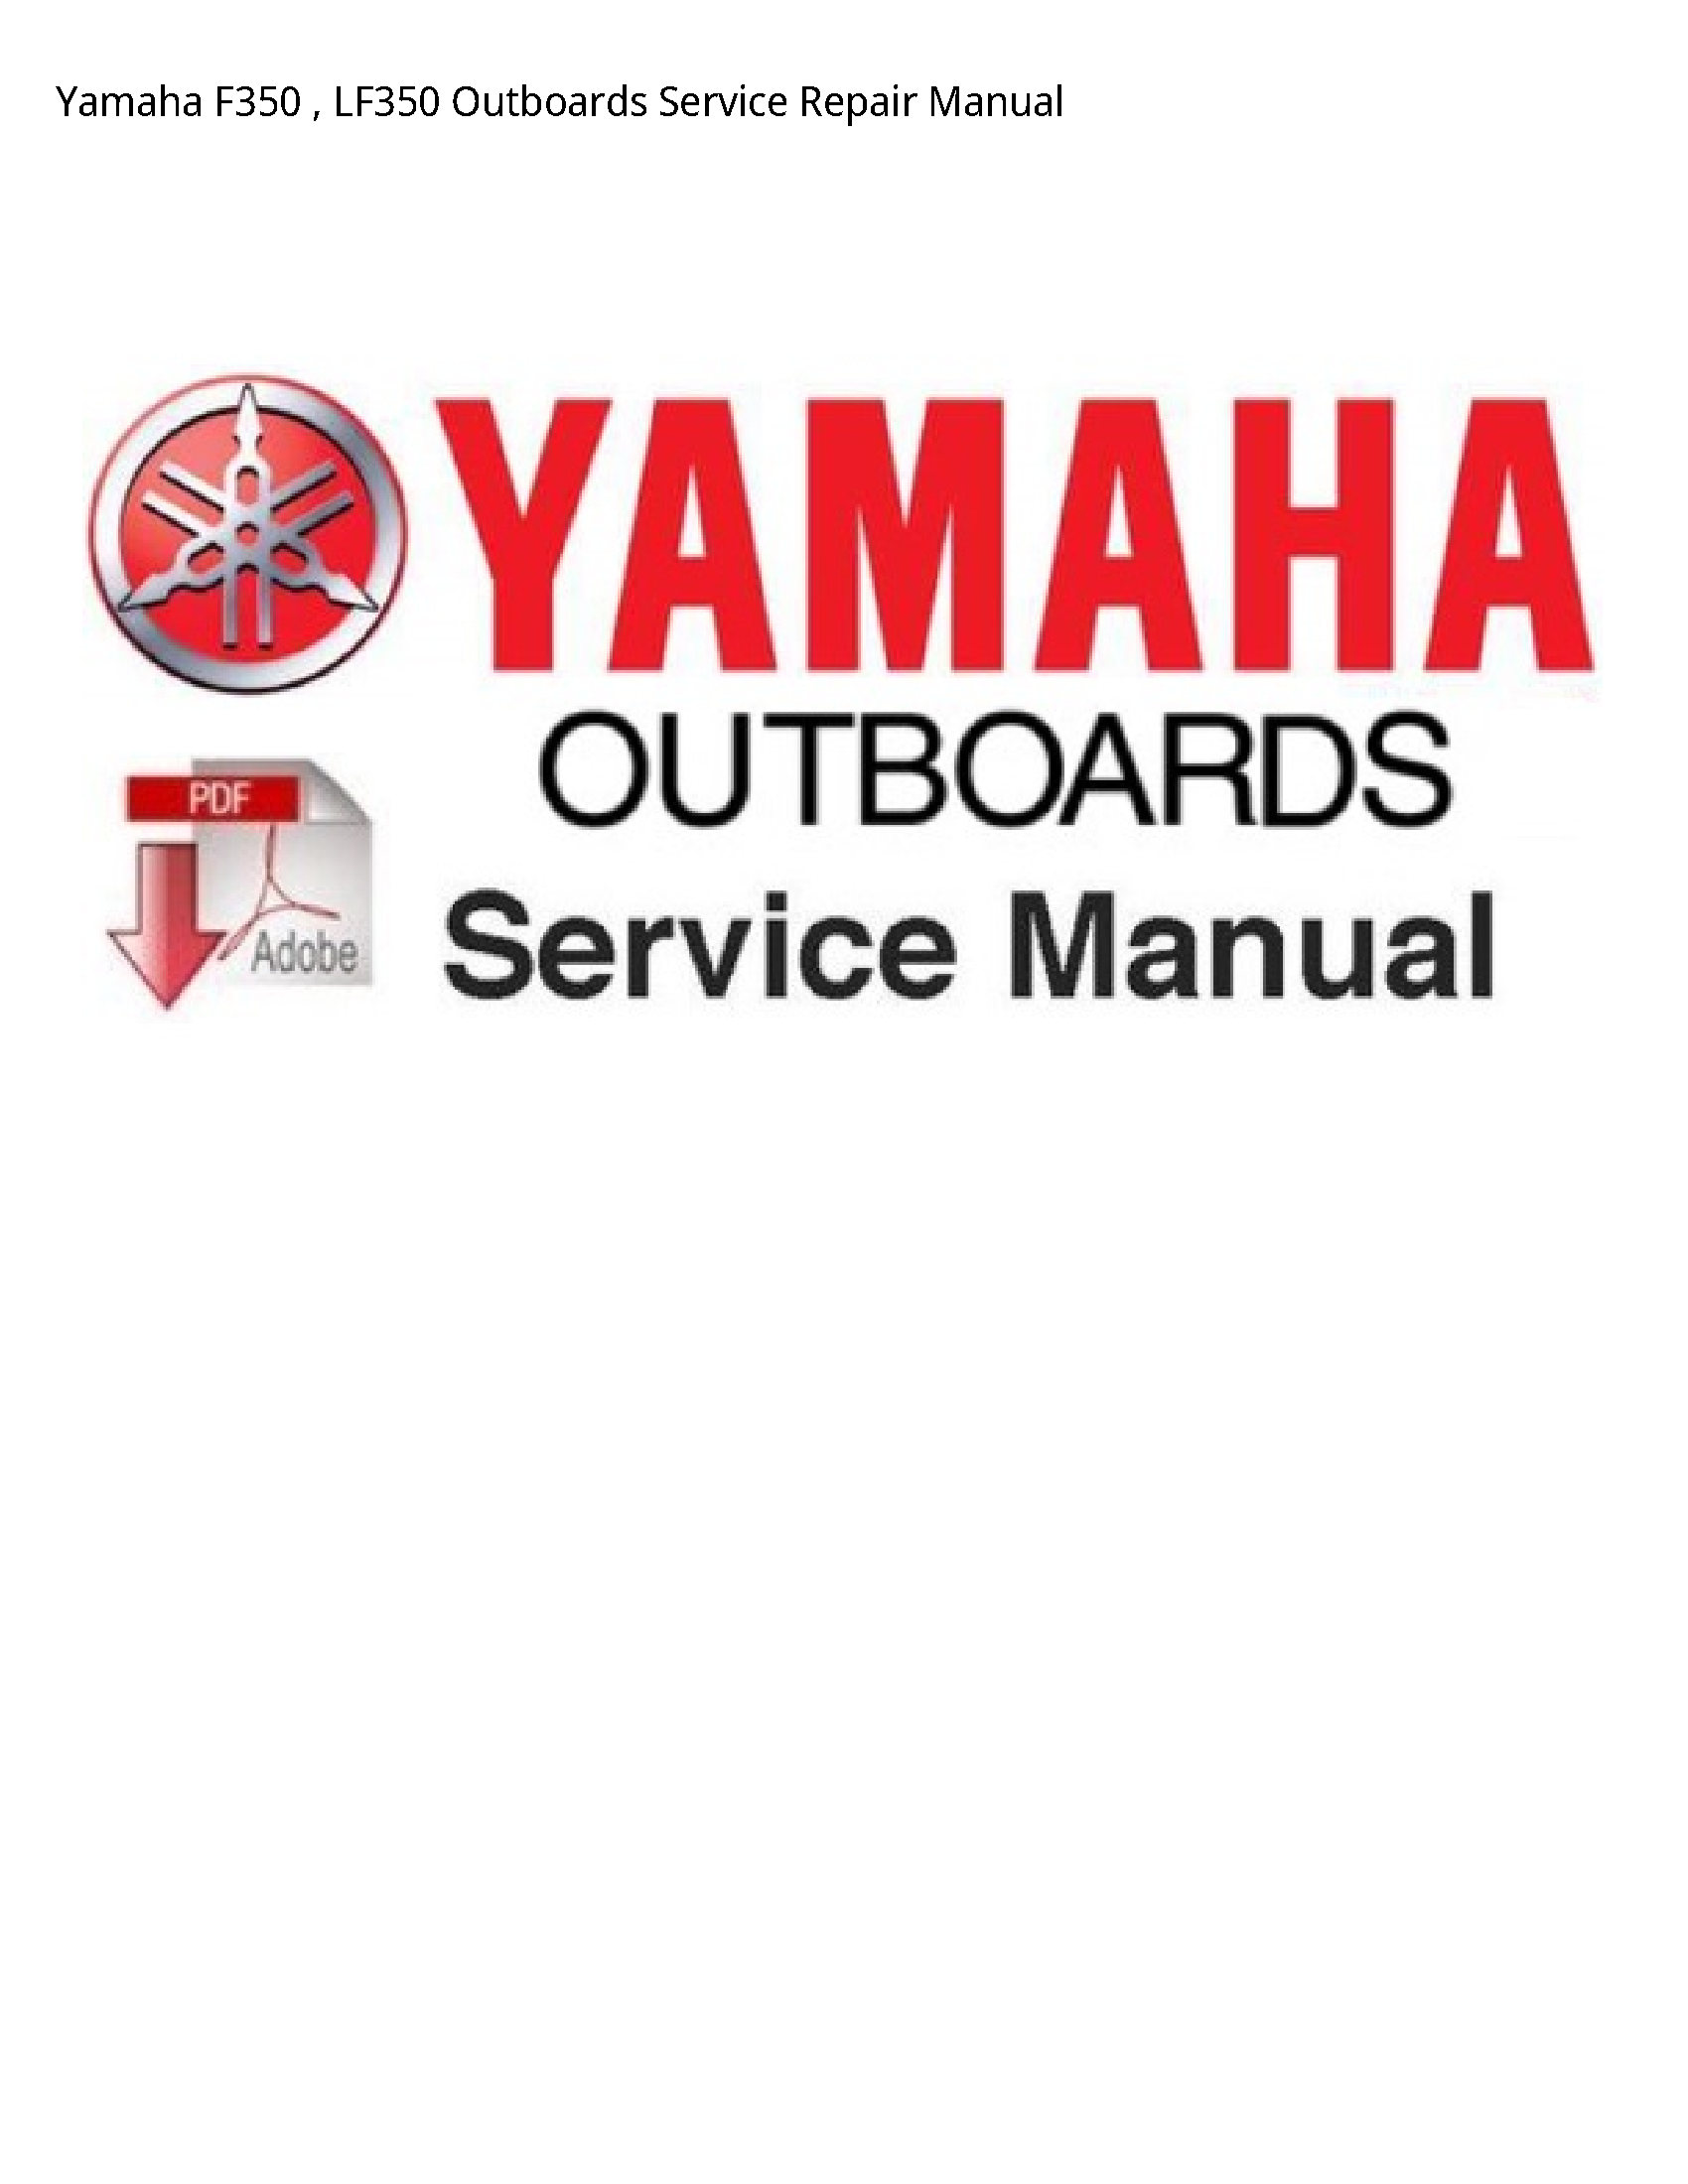 Yamaha F350 Outboards manual